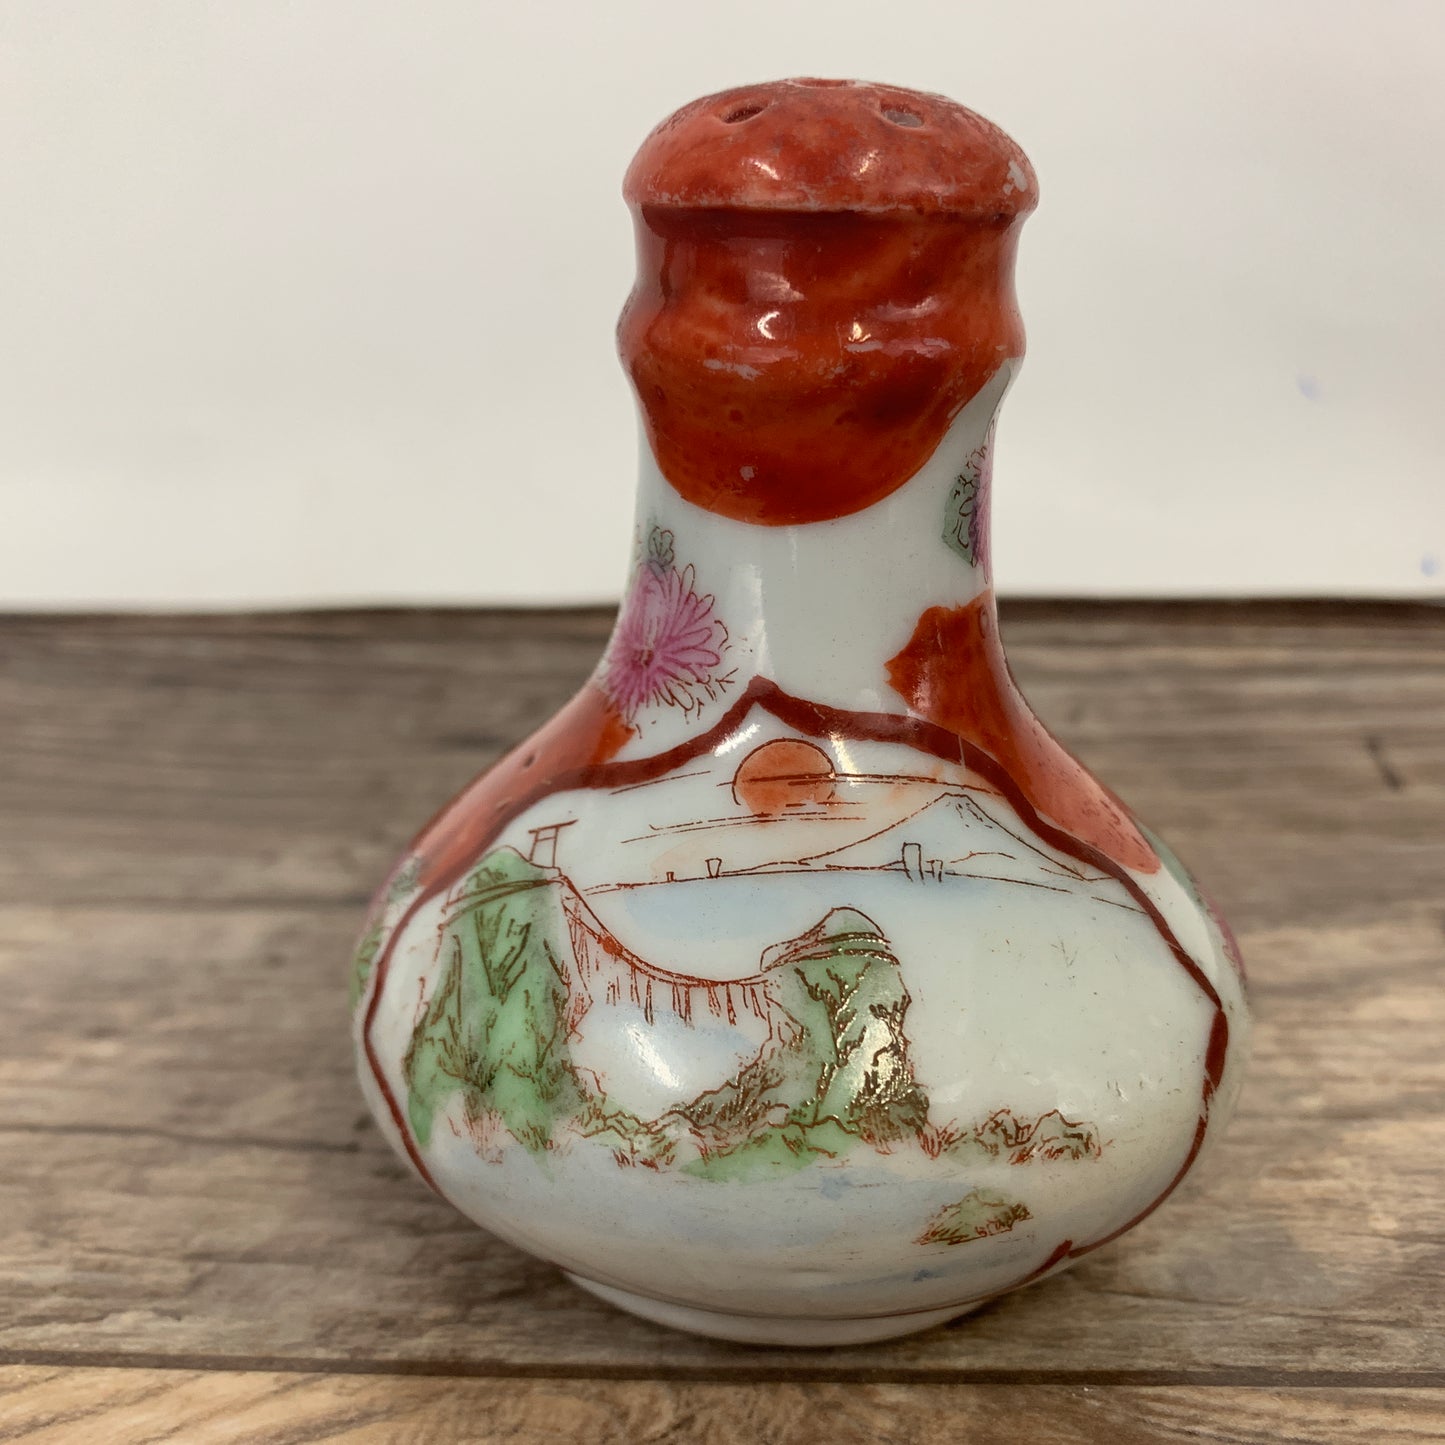 Vintage Salt Shaker with Asian Theme Design